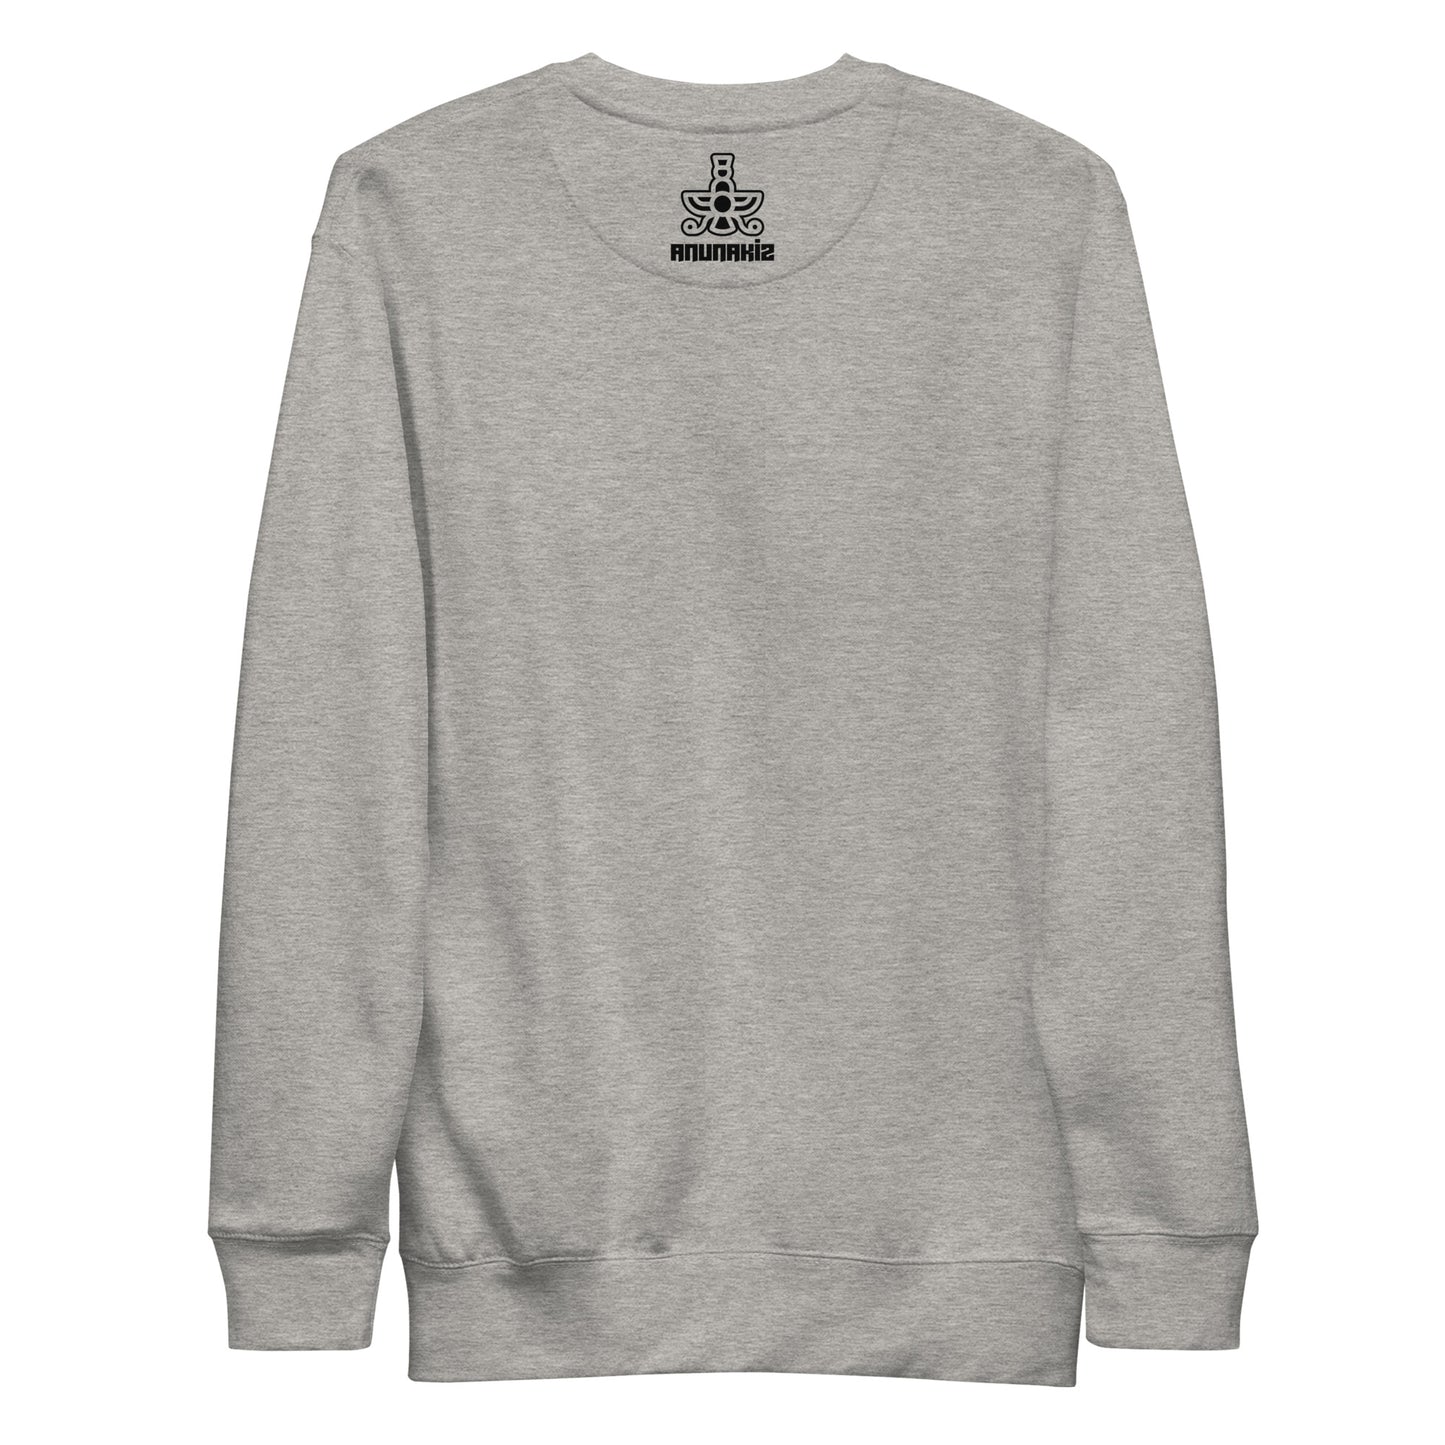 Anunakiz Hammurabi Graffiti Unisex Premium Sweatshirt